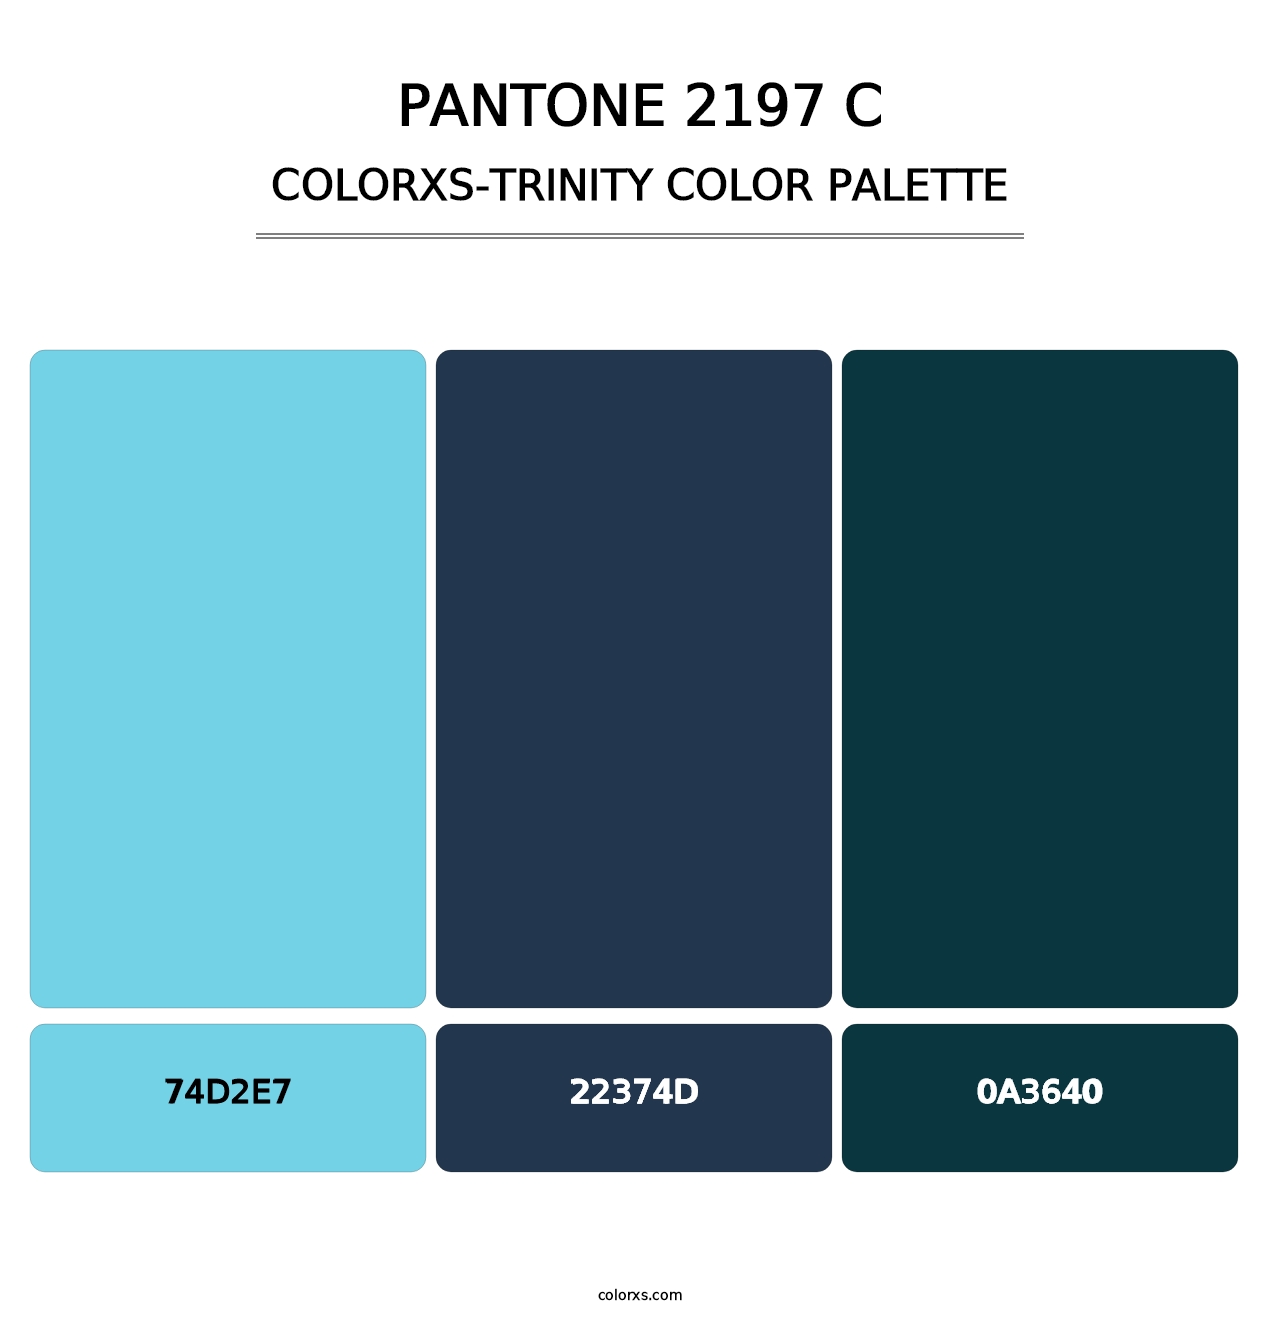 PANTONE 2197 C - Colorxs Trinity Palette